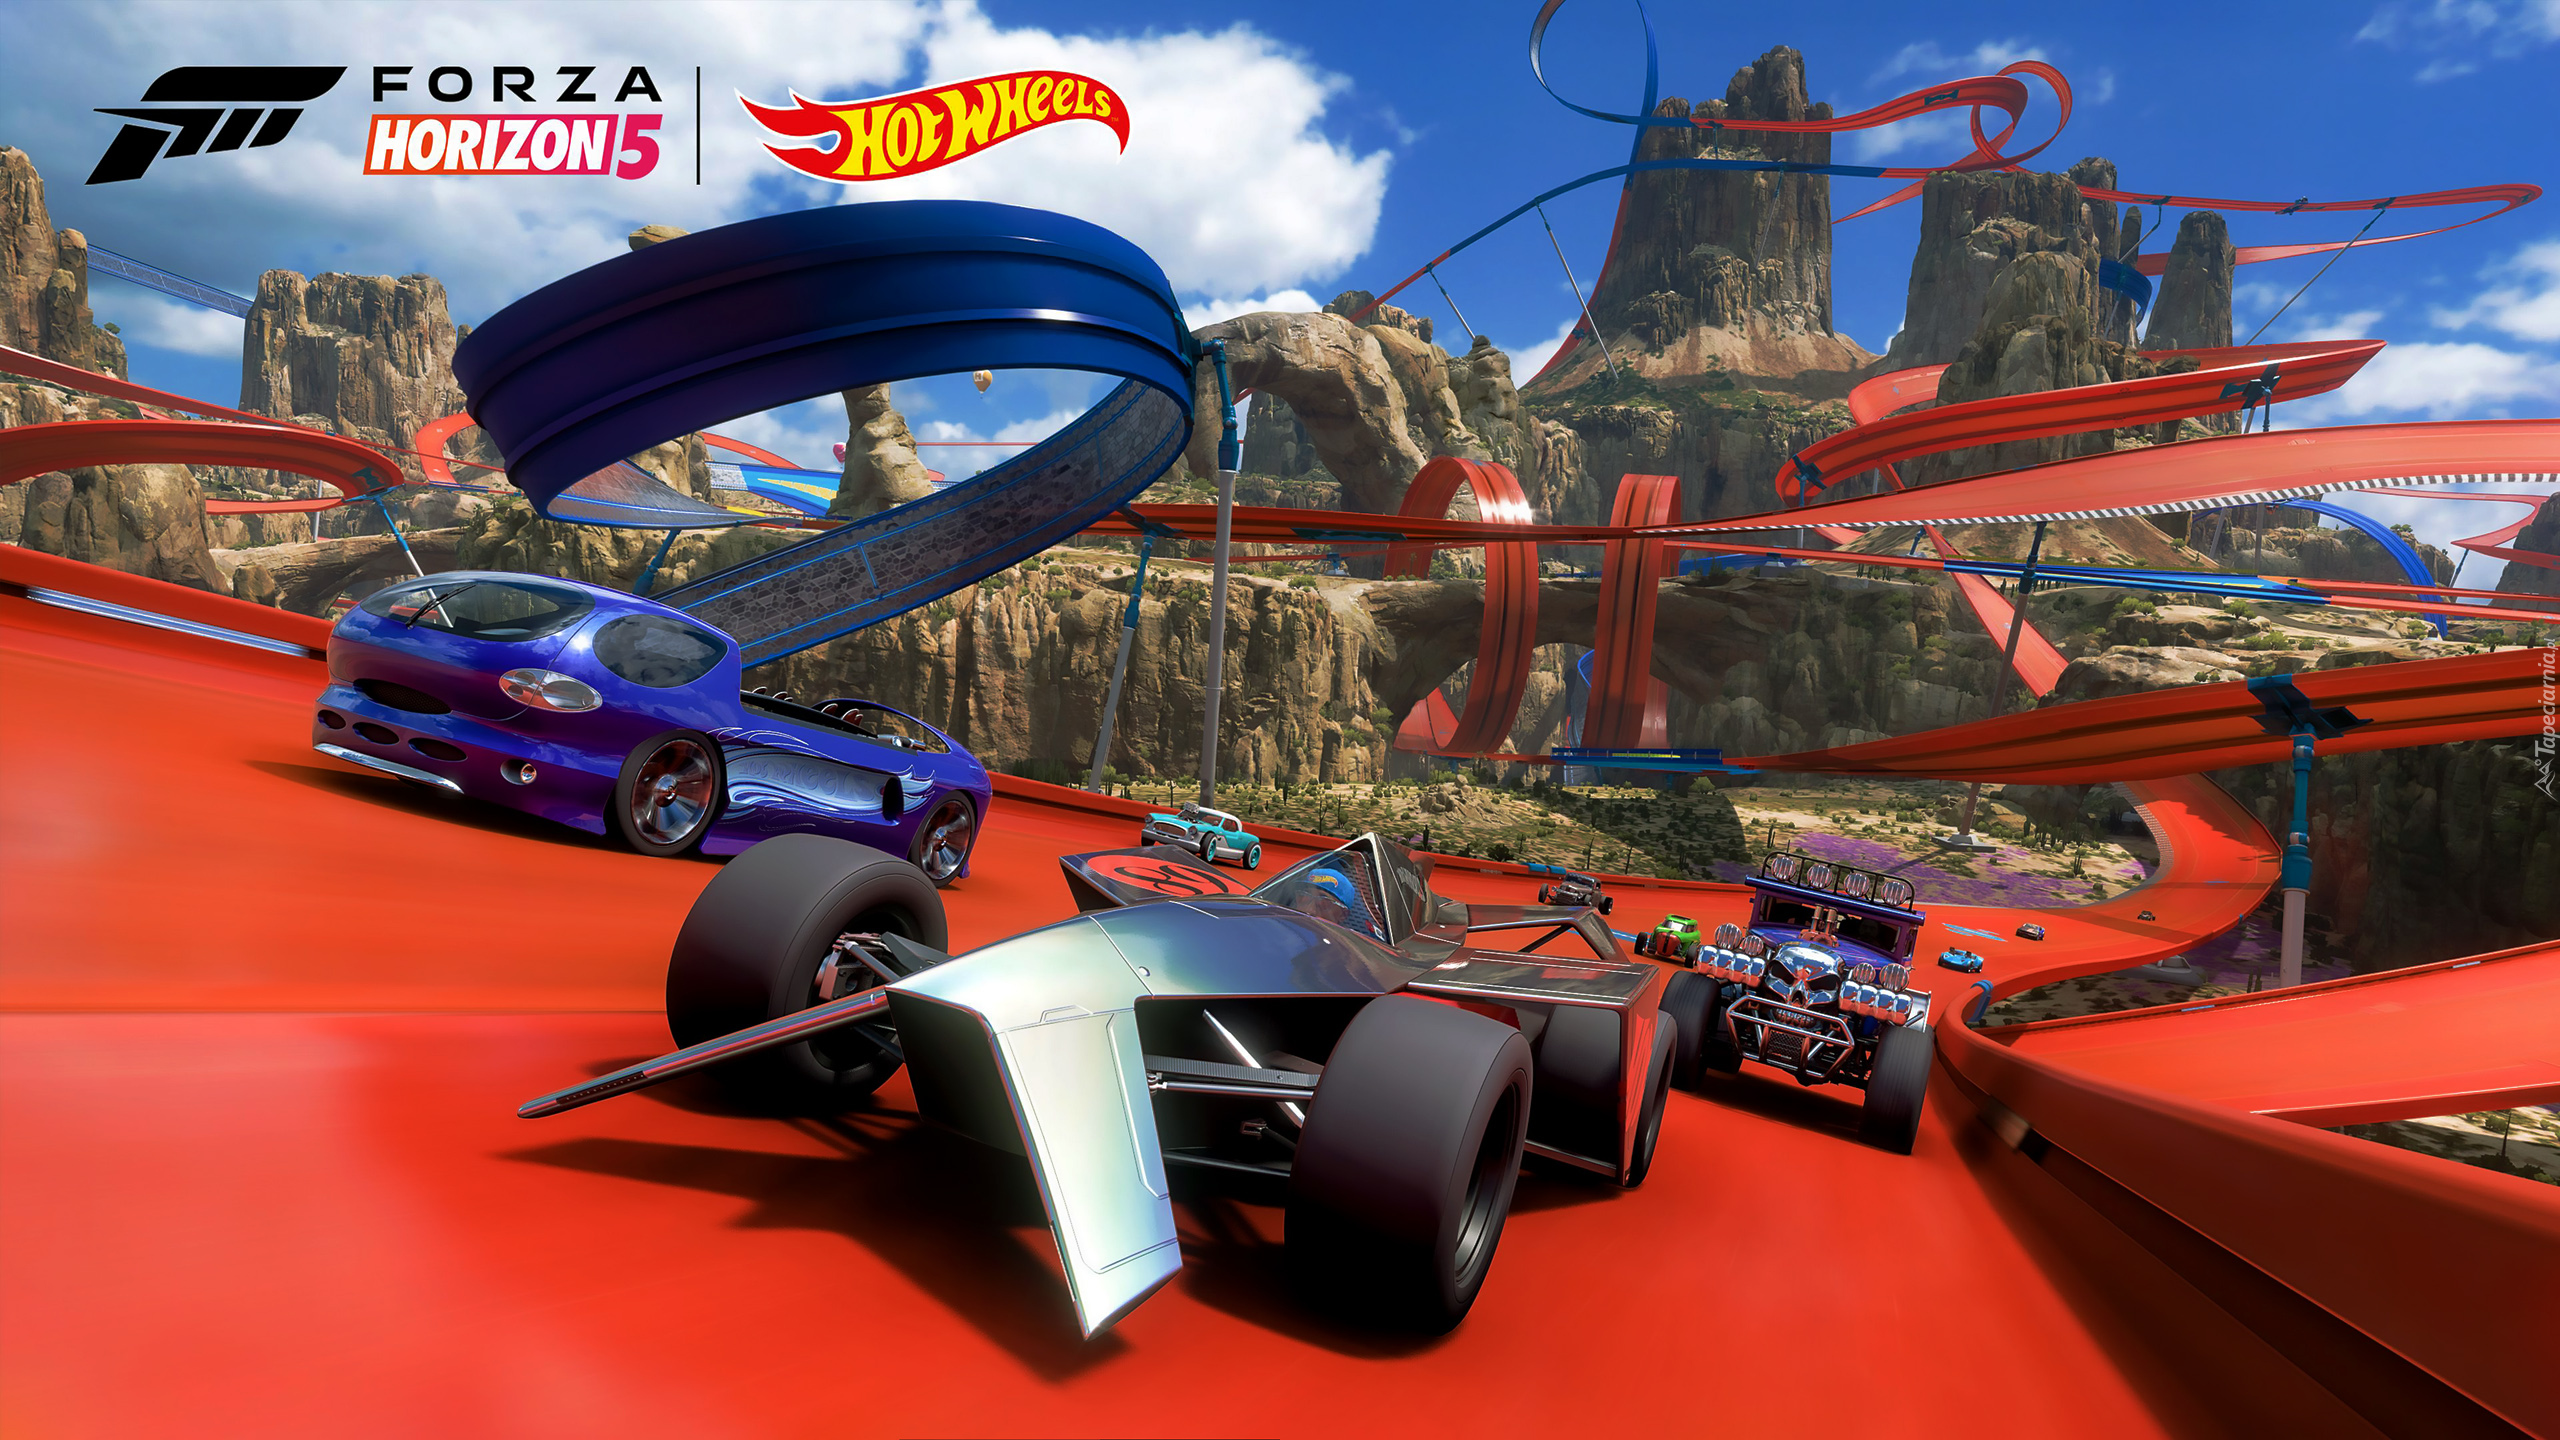 Gra, Forza Horizon 5 Hot Whells, Samochody, Pojazdy, Wyścig, Trasa, Serpentyna